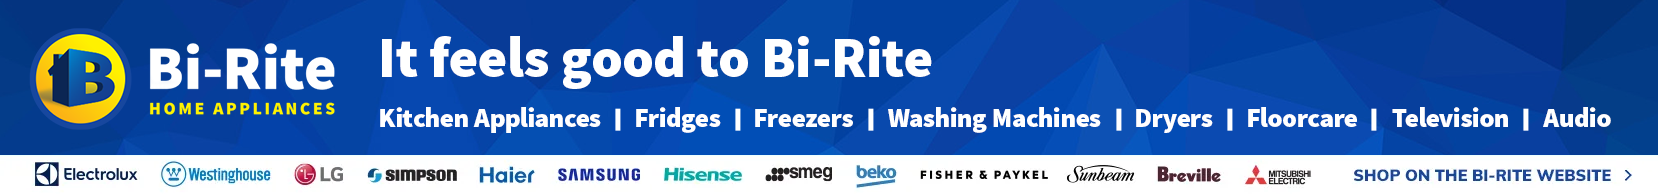 Bi-Rite Home Appliances